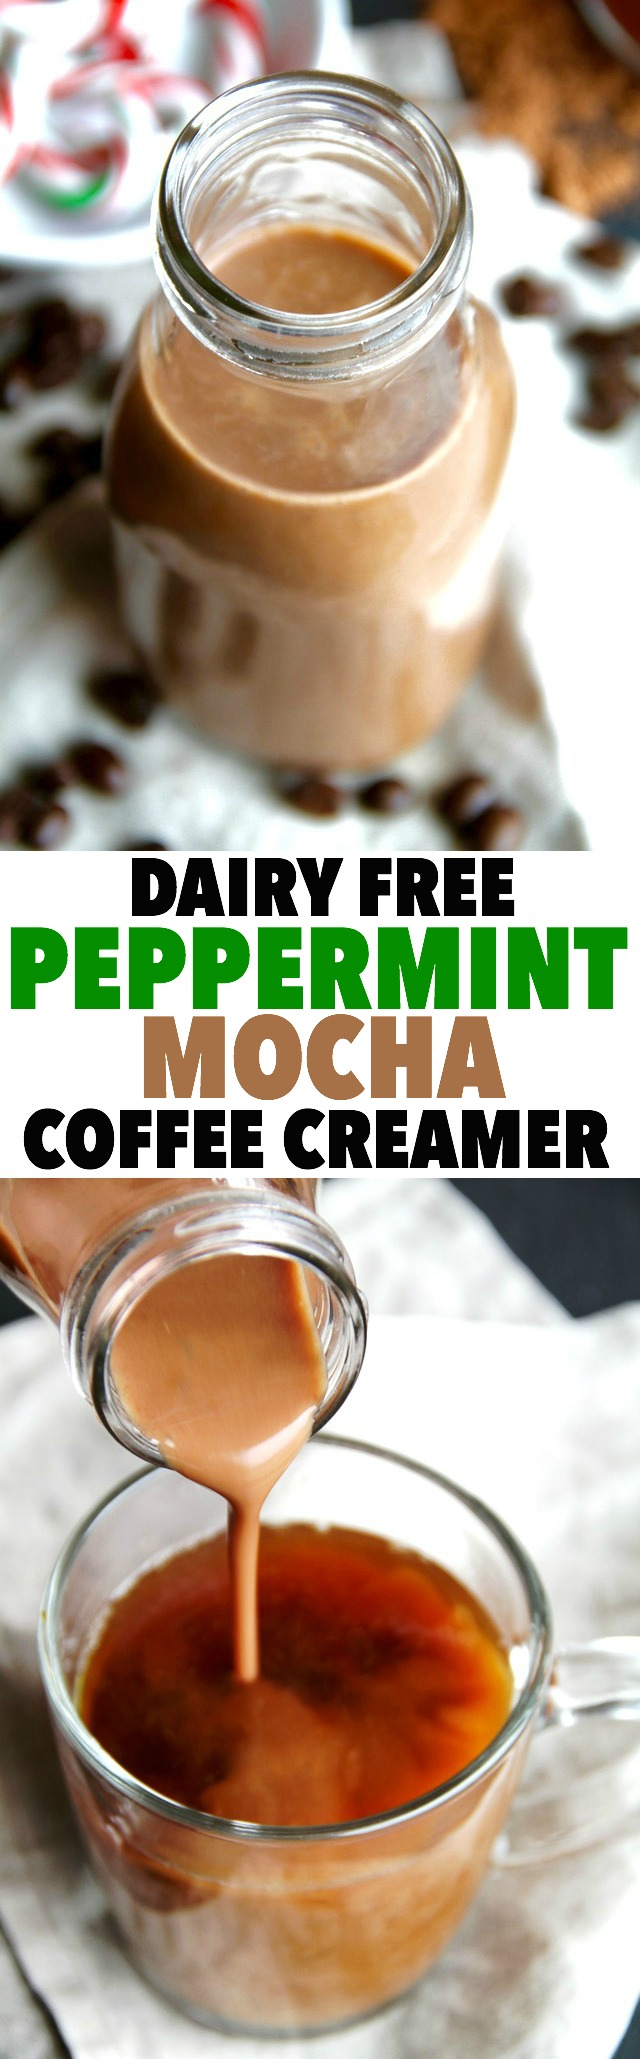 Peppermint Mocha Coffee Creamer